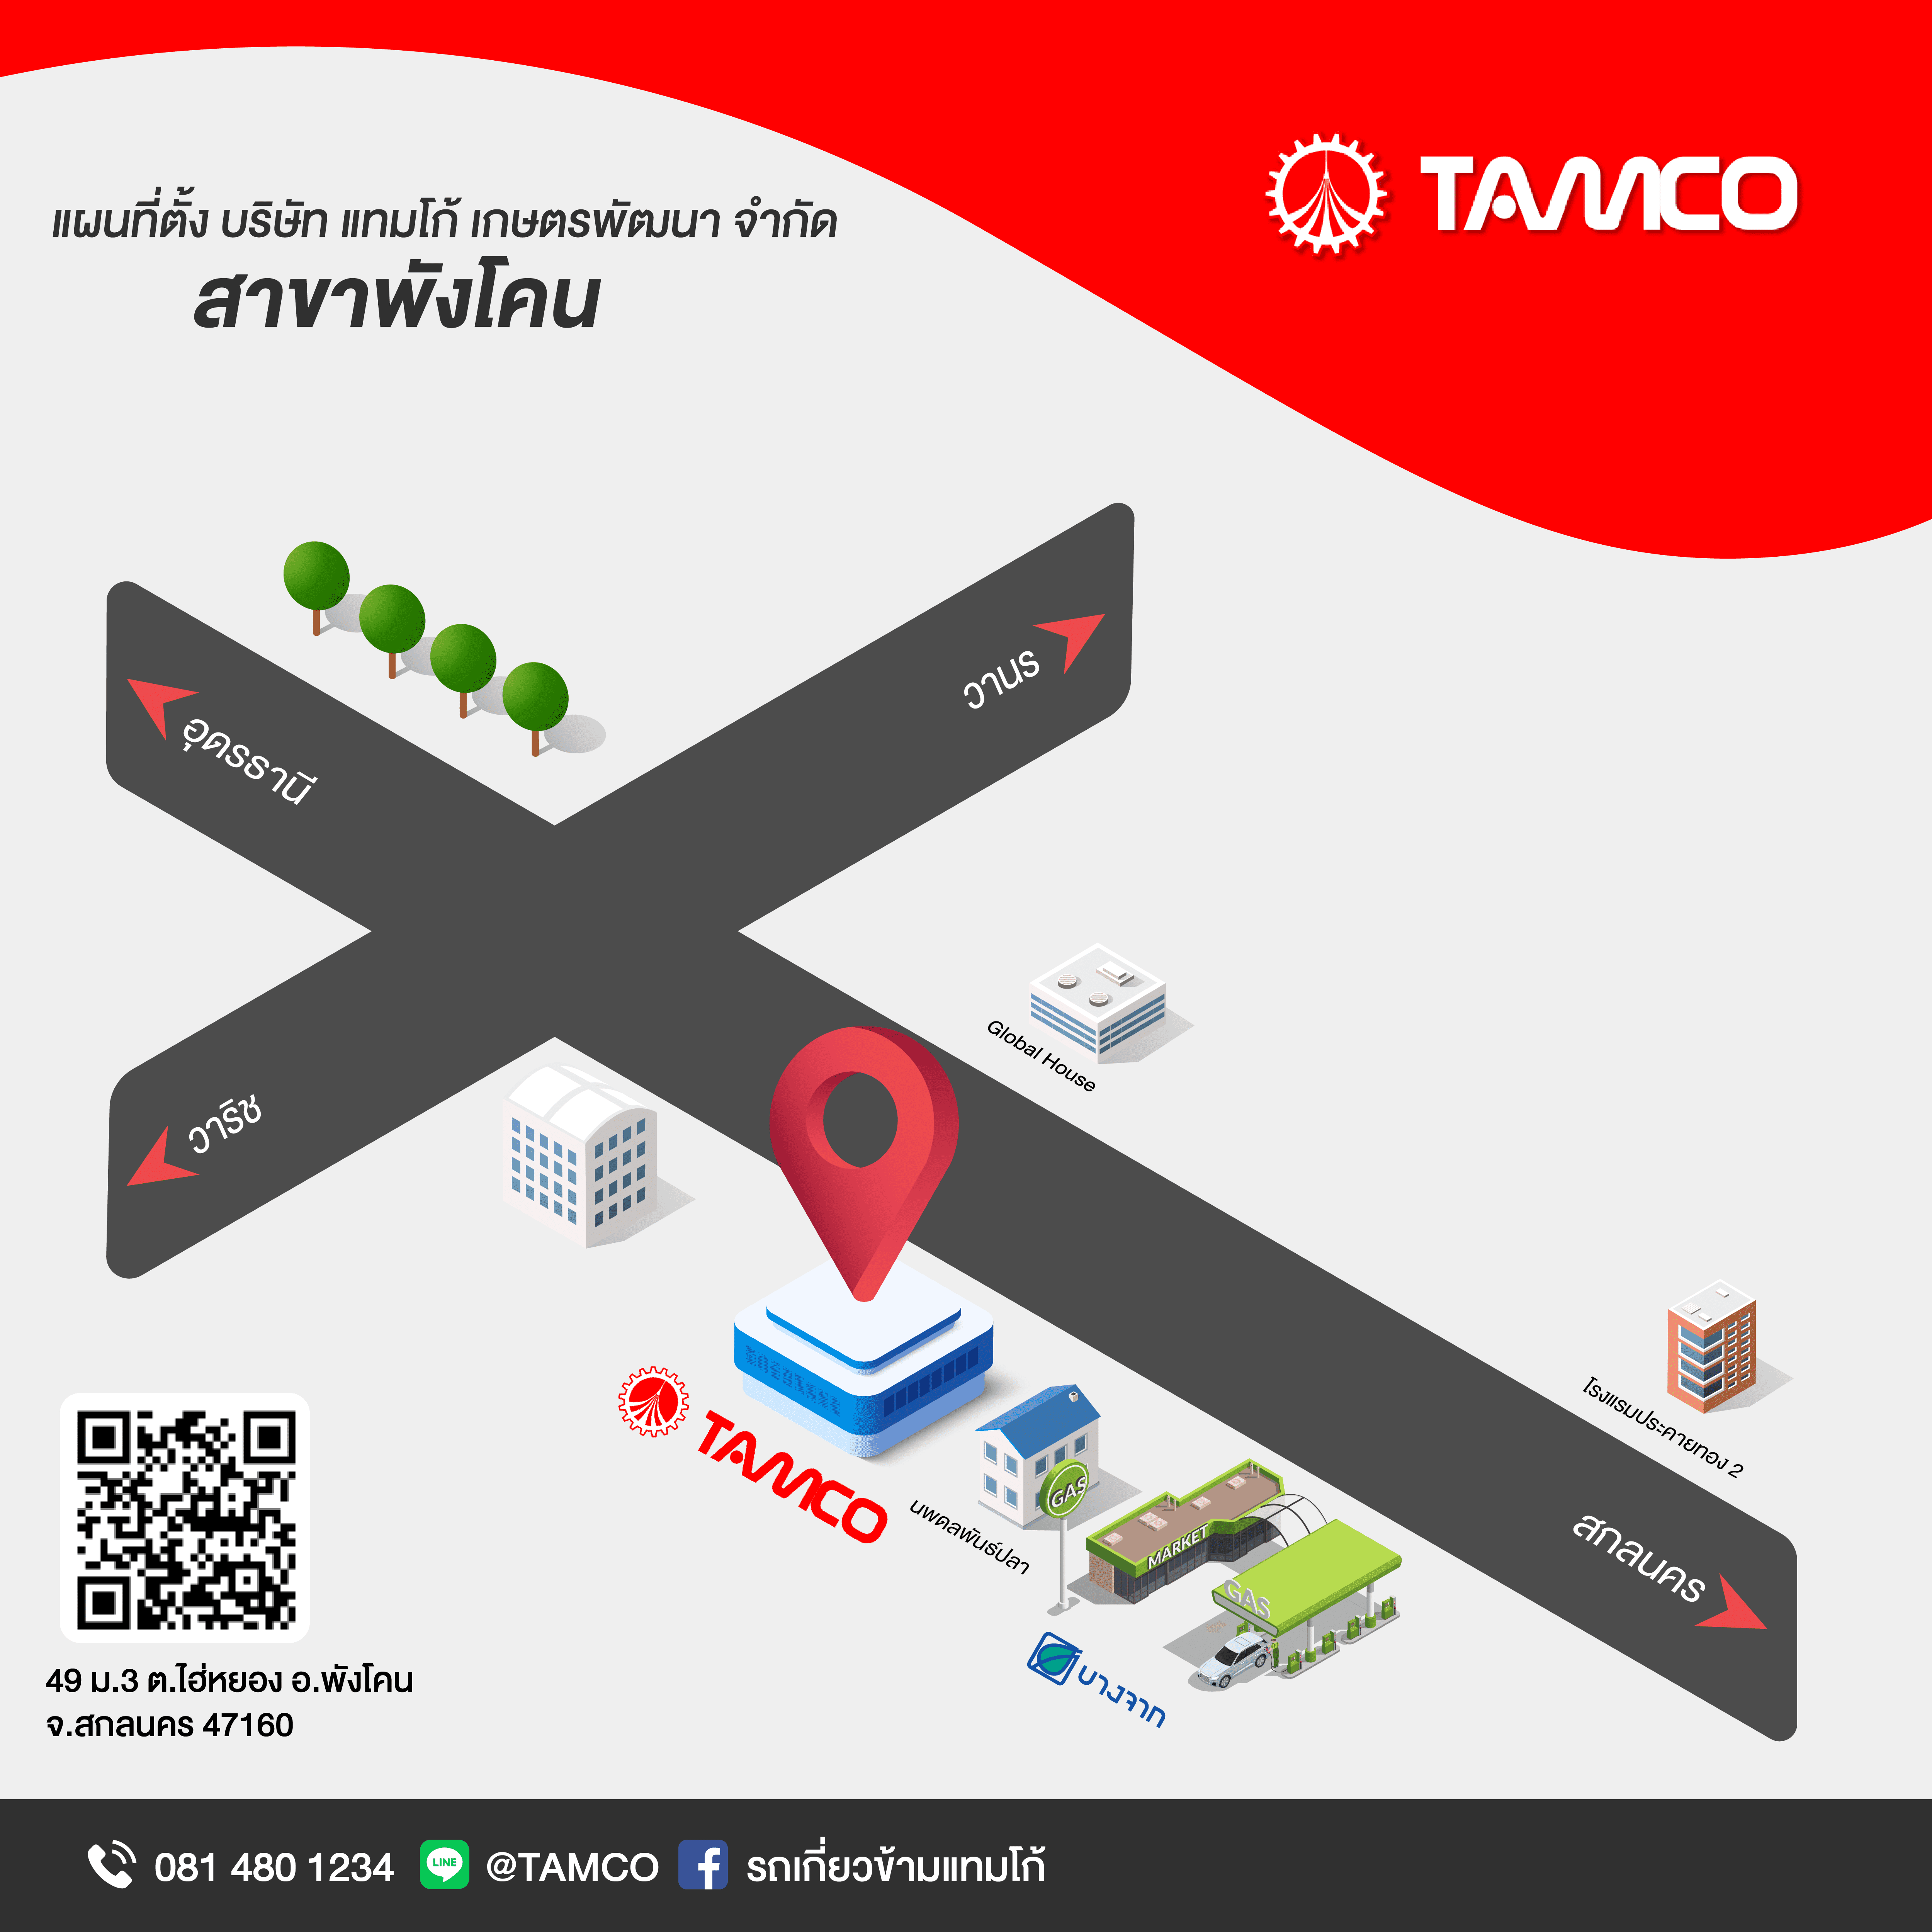 Tamco-Phangkhon